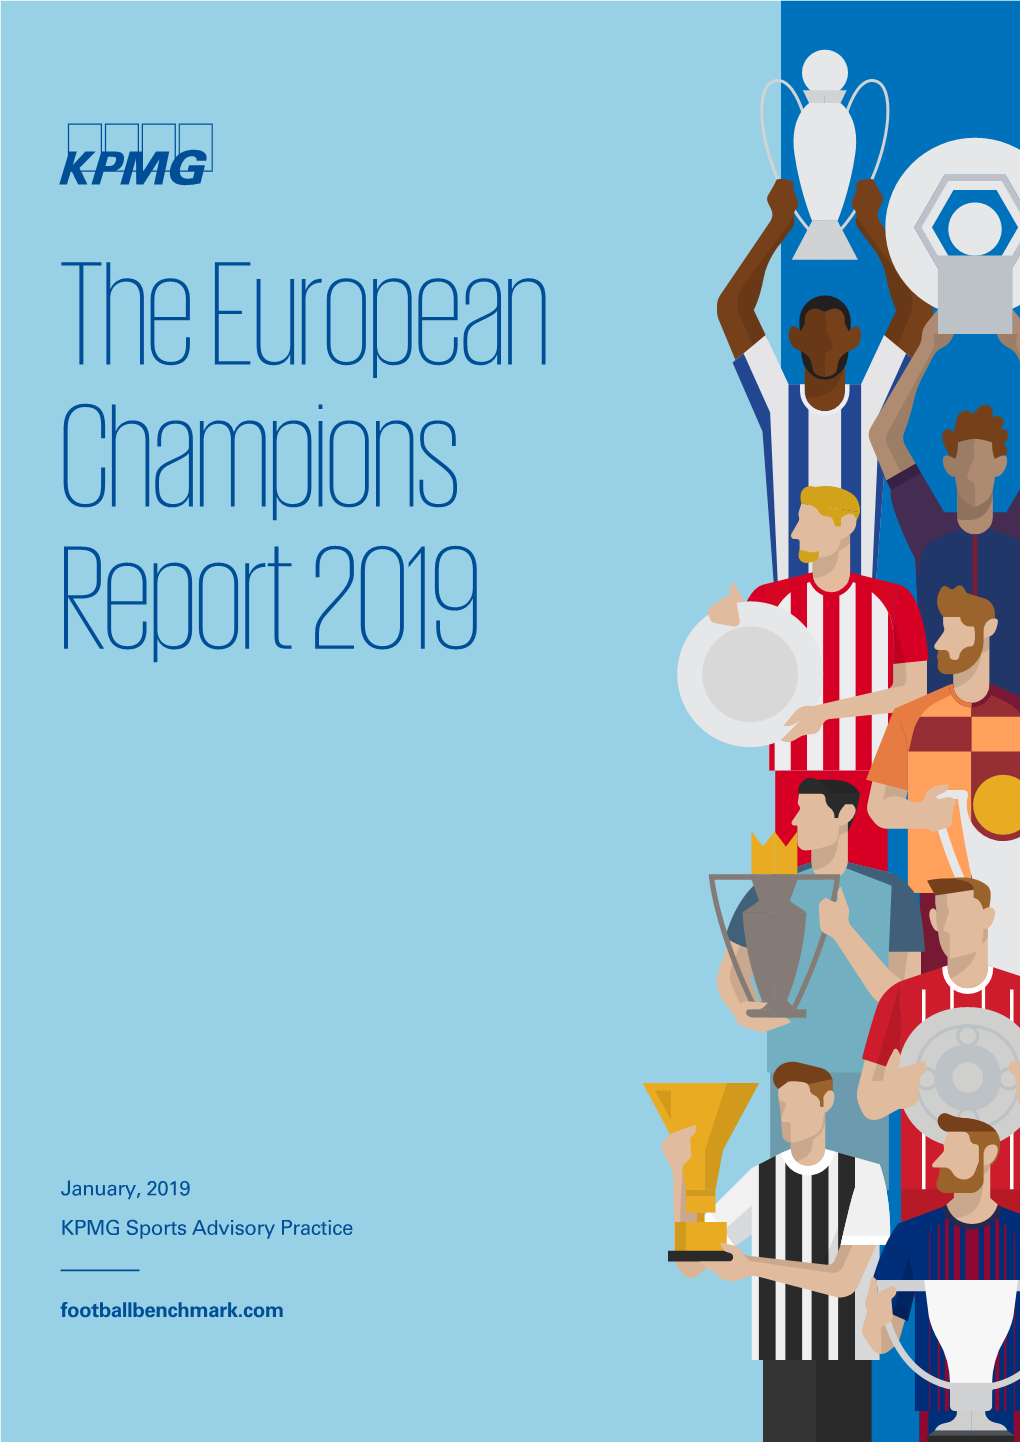 The European Champions Report 2019 1